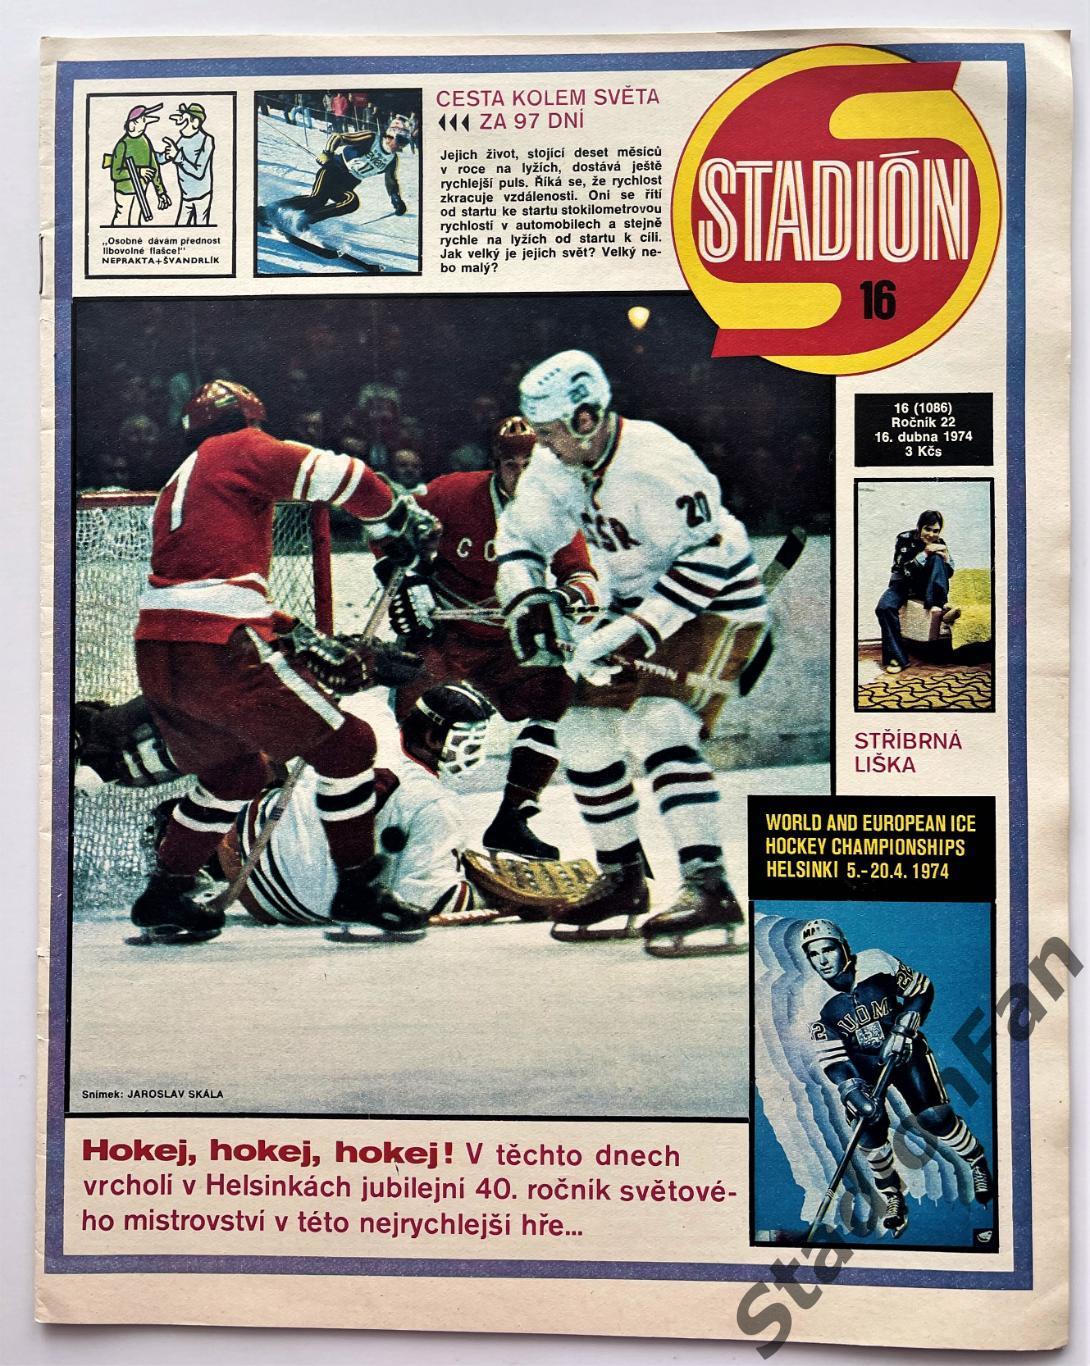 Журнал STADION №16 за 1974 год.